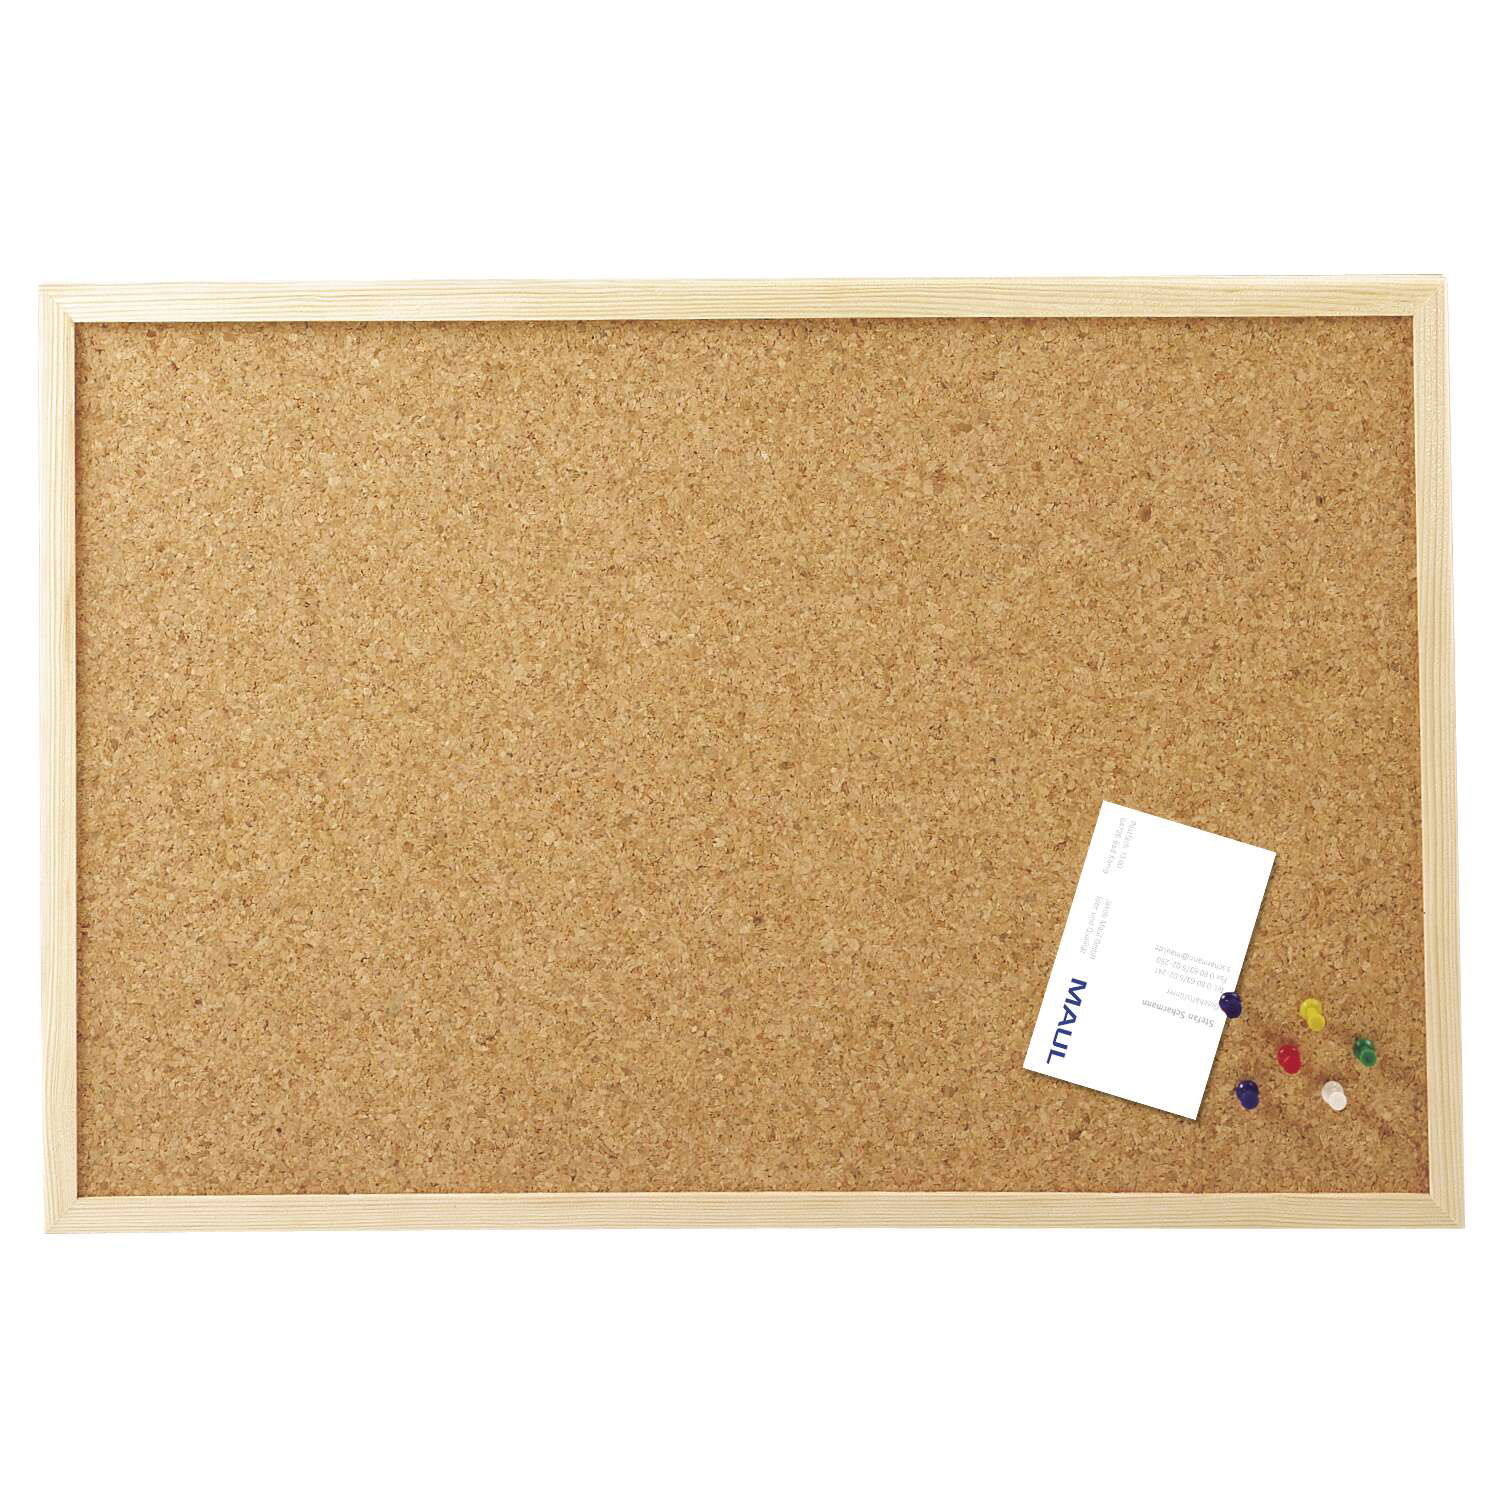 Prikbord, 60 x 80 cm, kurk, houten frame